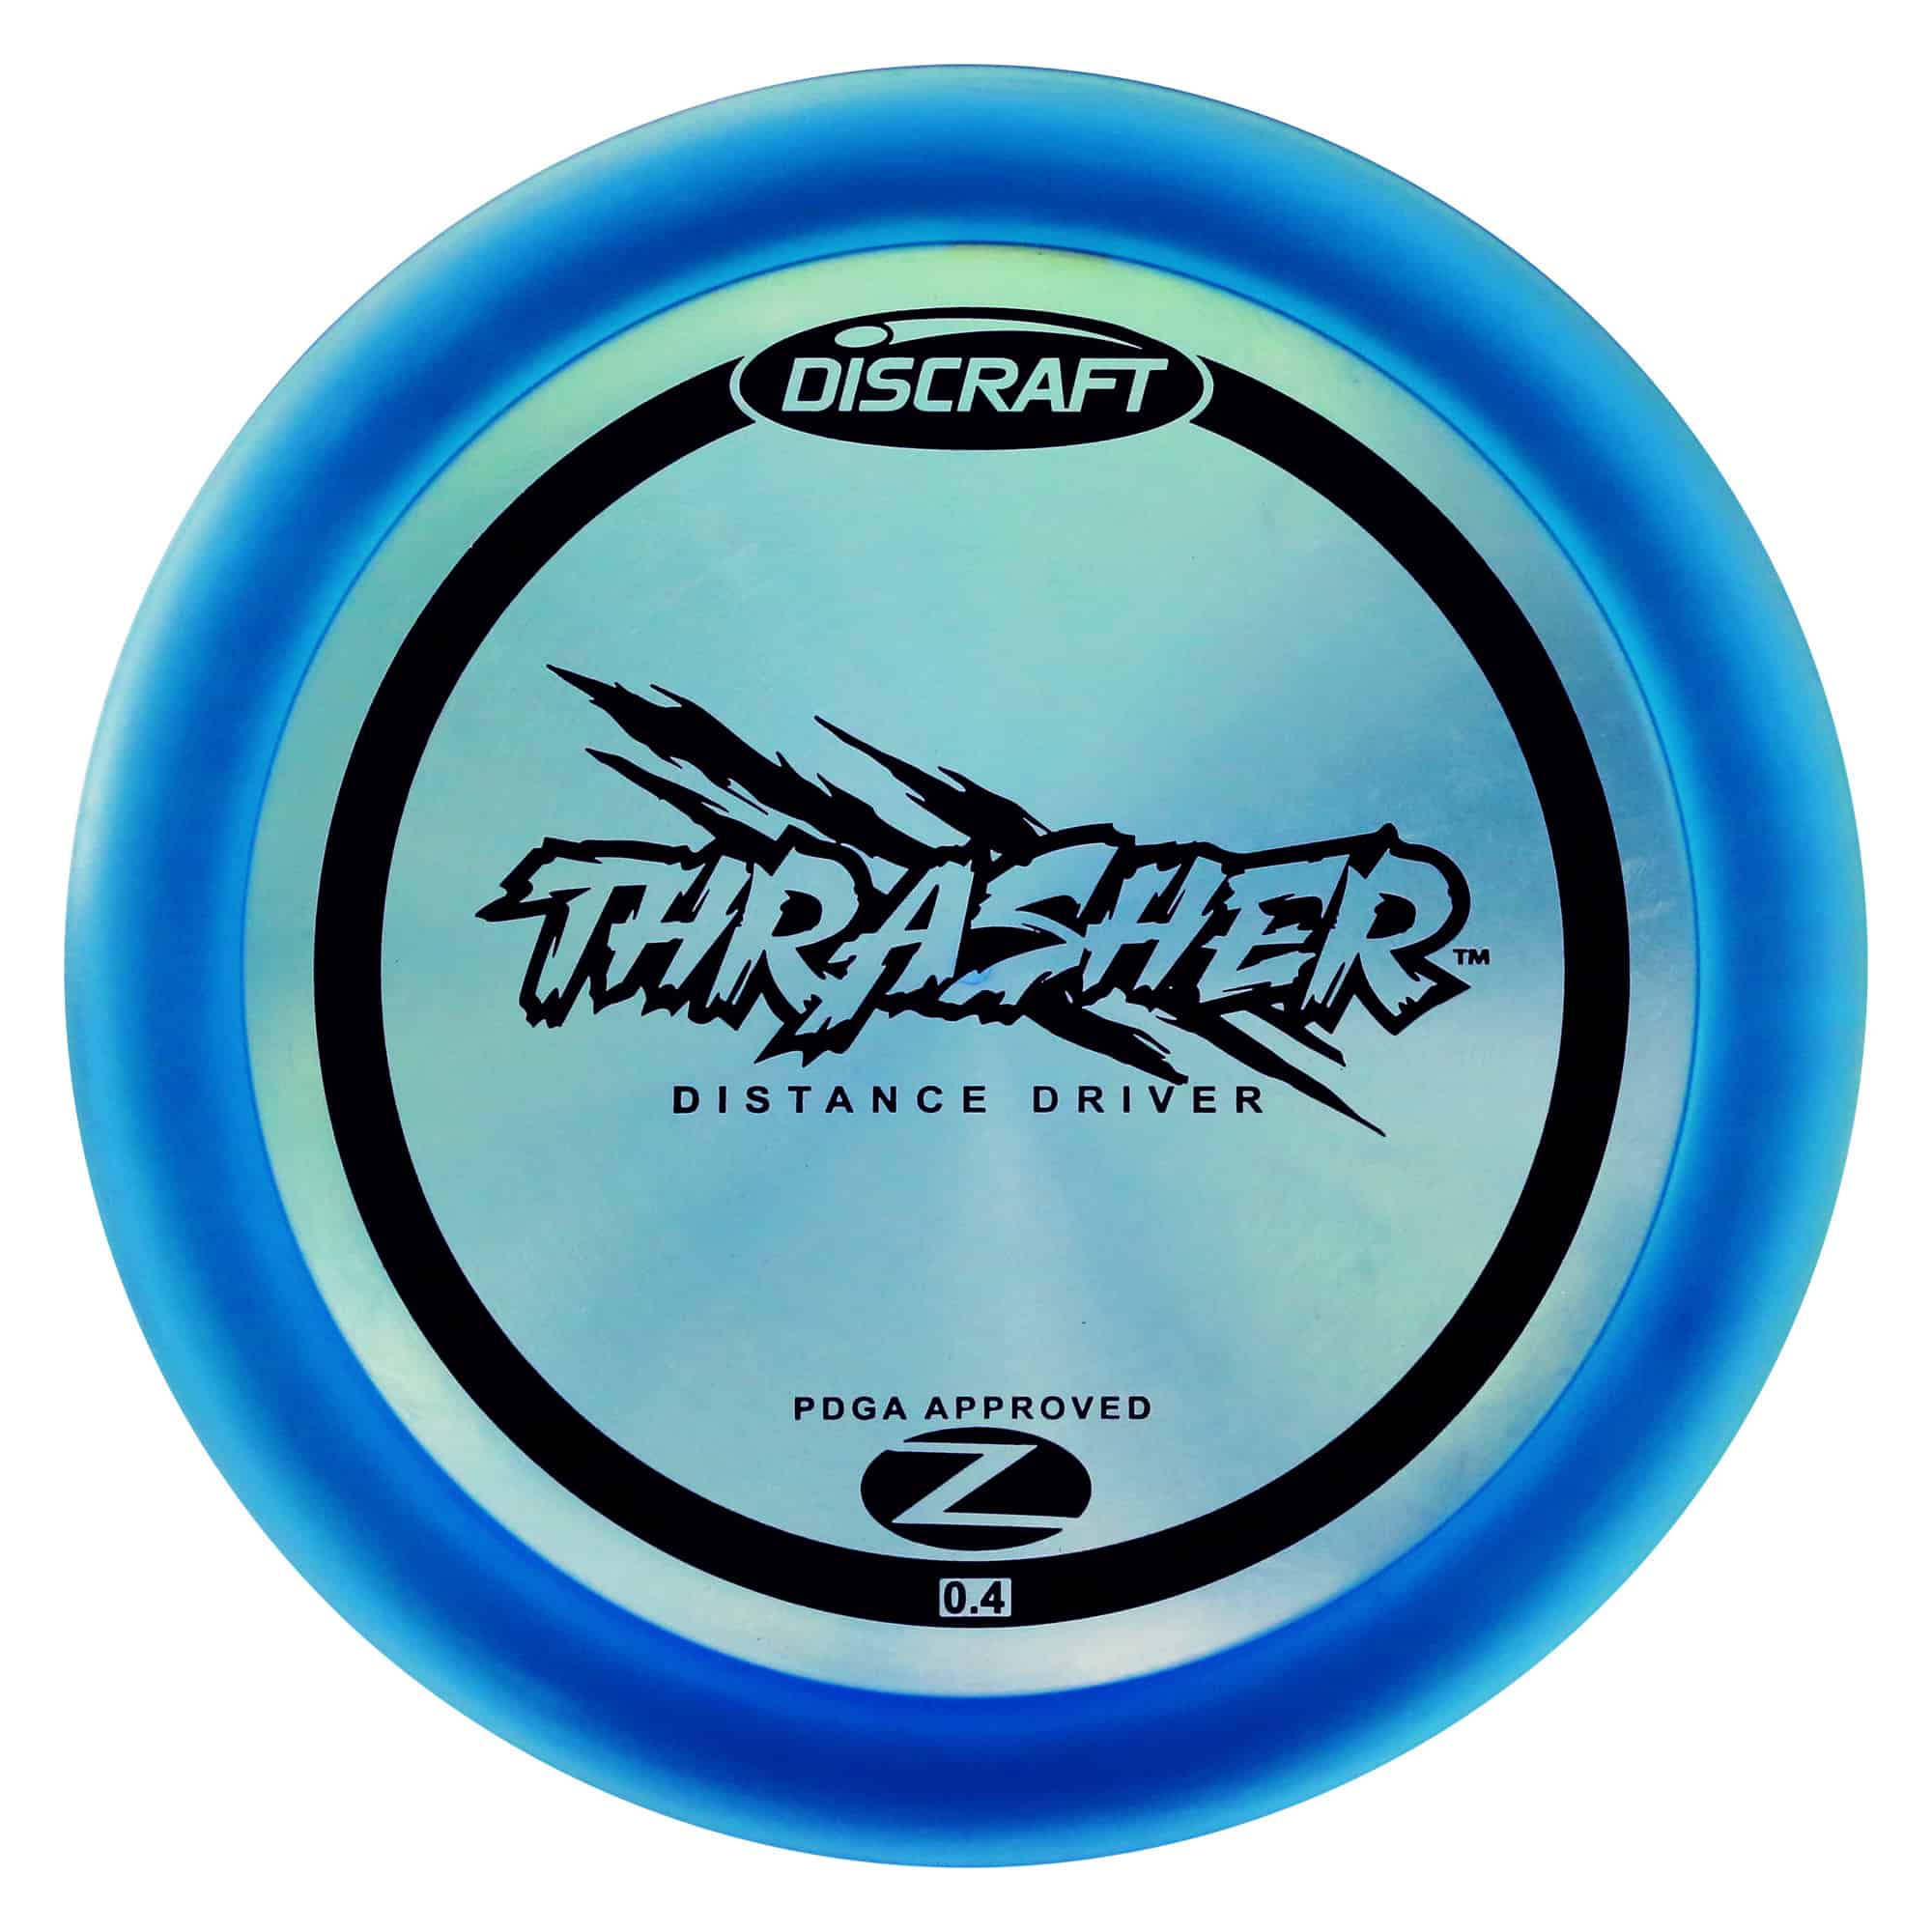 Discraft's Thrasher Z-line